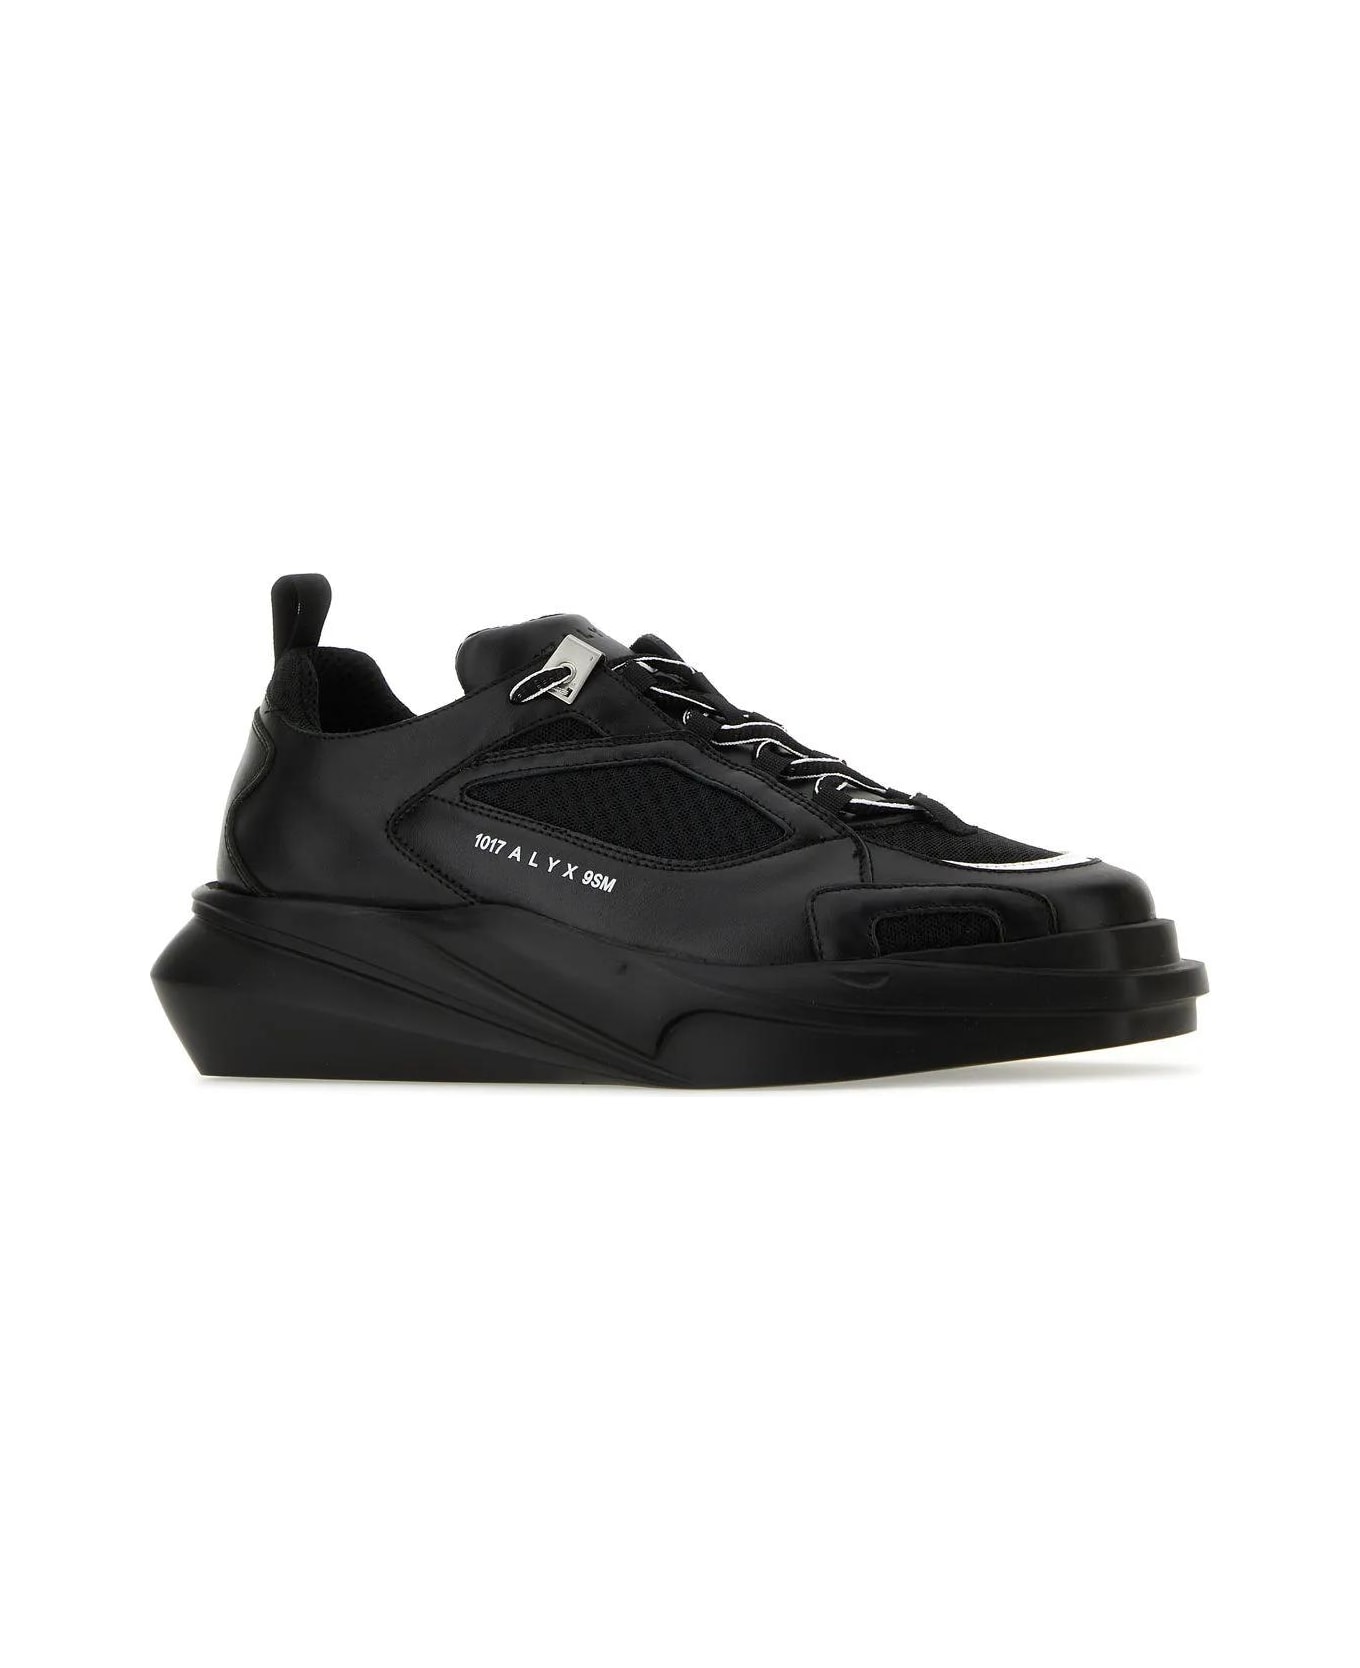 1017 ALYX 9SM Black Leather Hiking Sneakers - Black White